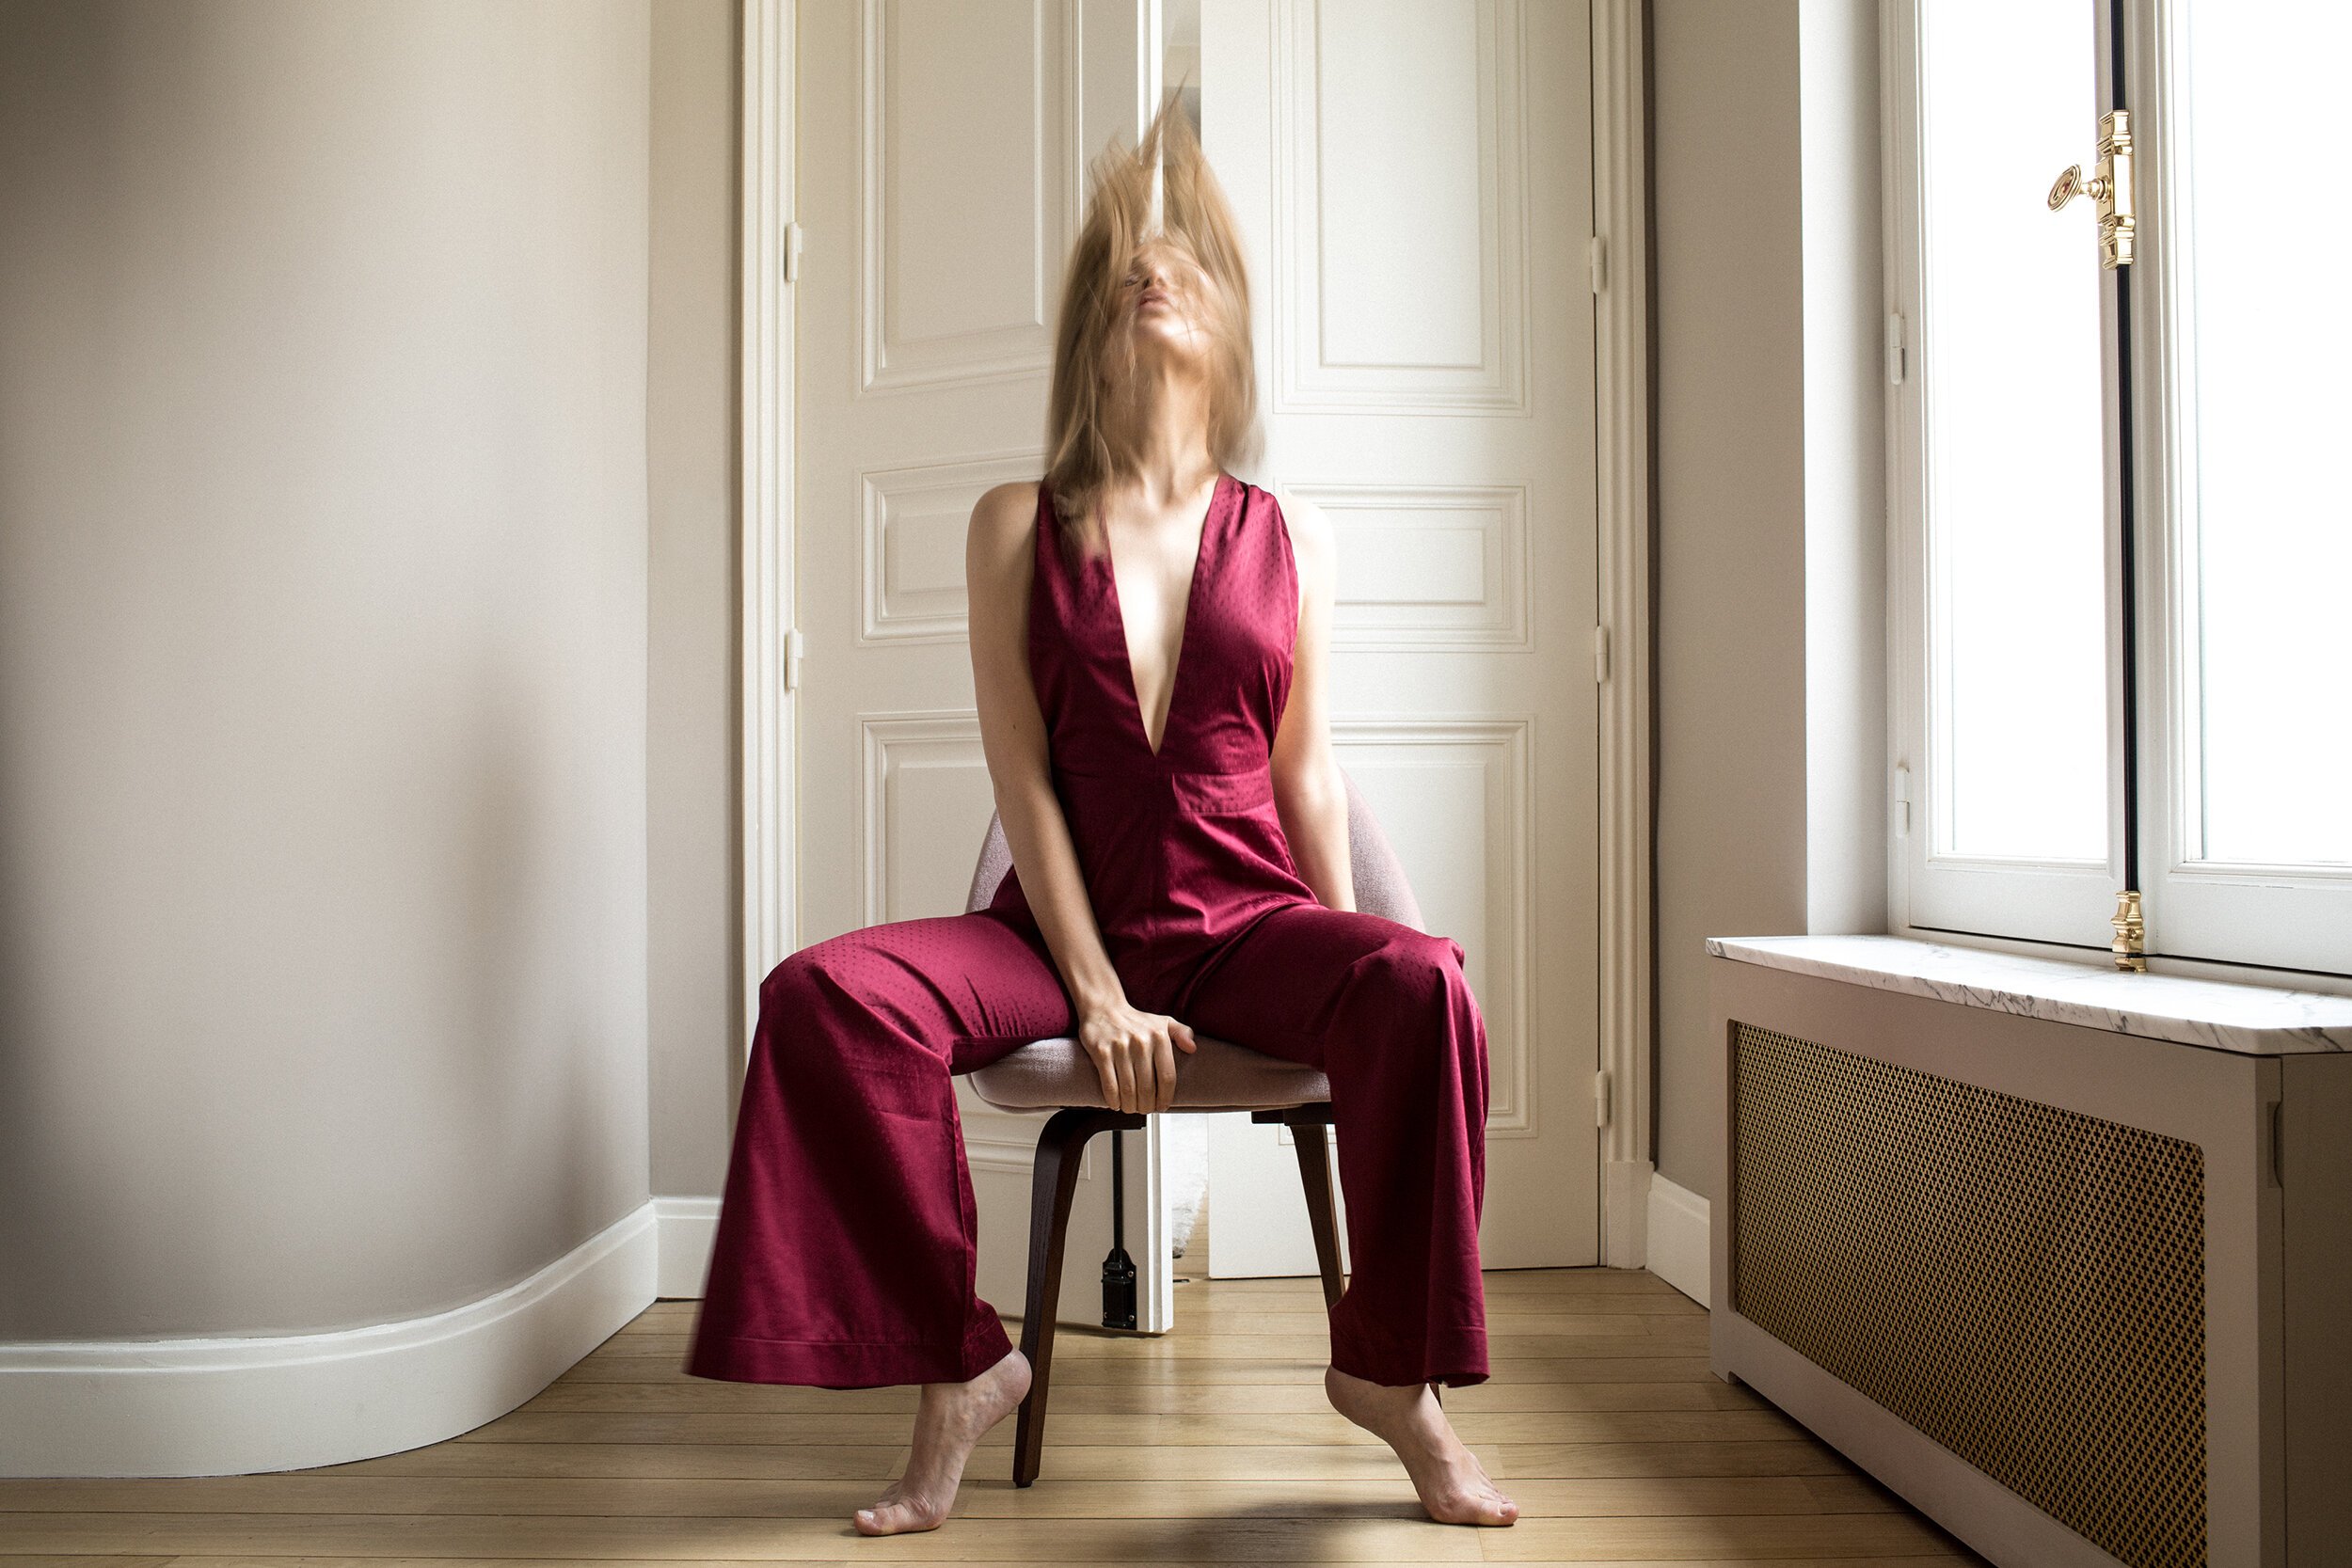 motoin blur parisian apartment model blonde hair whip artistic dark red jumpsuit.jpg